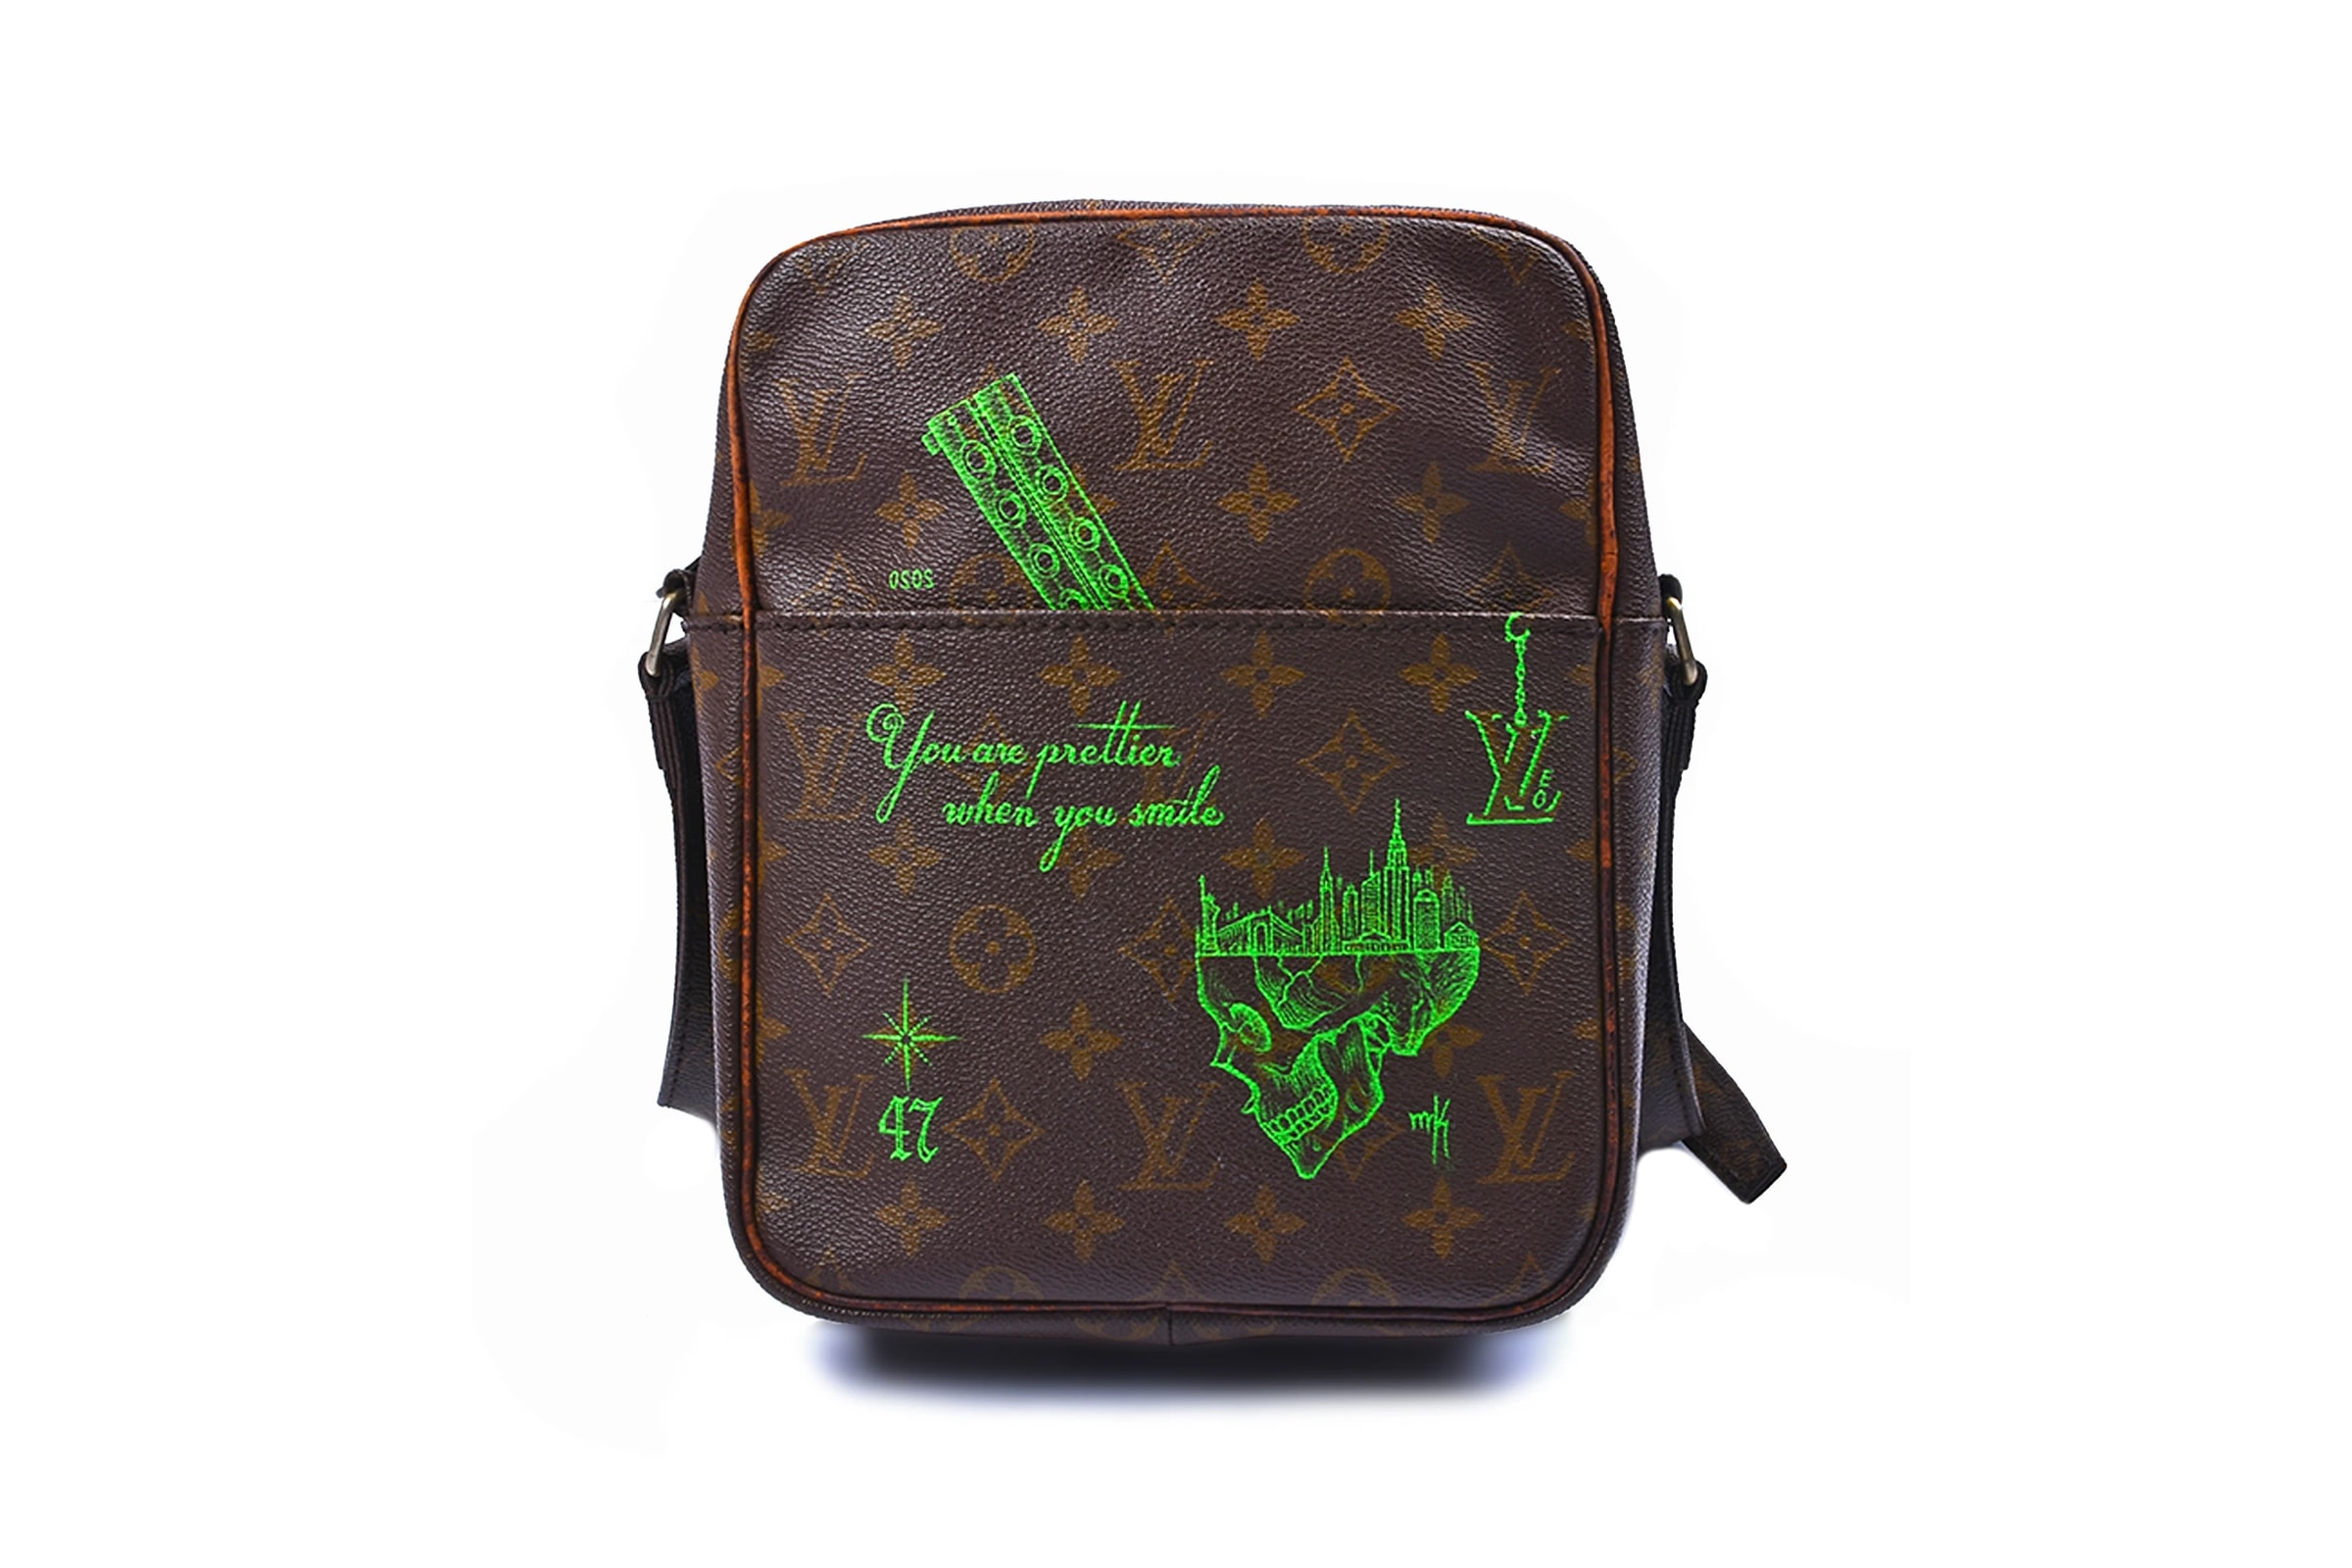 grailed mr. k custom lv louis vuitton bag giveaway sign up bags instagram monogram green brown leather danube 